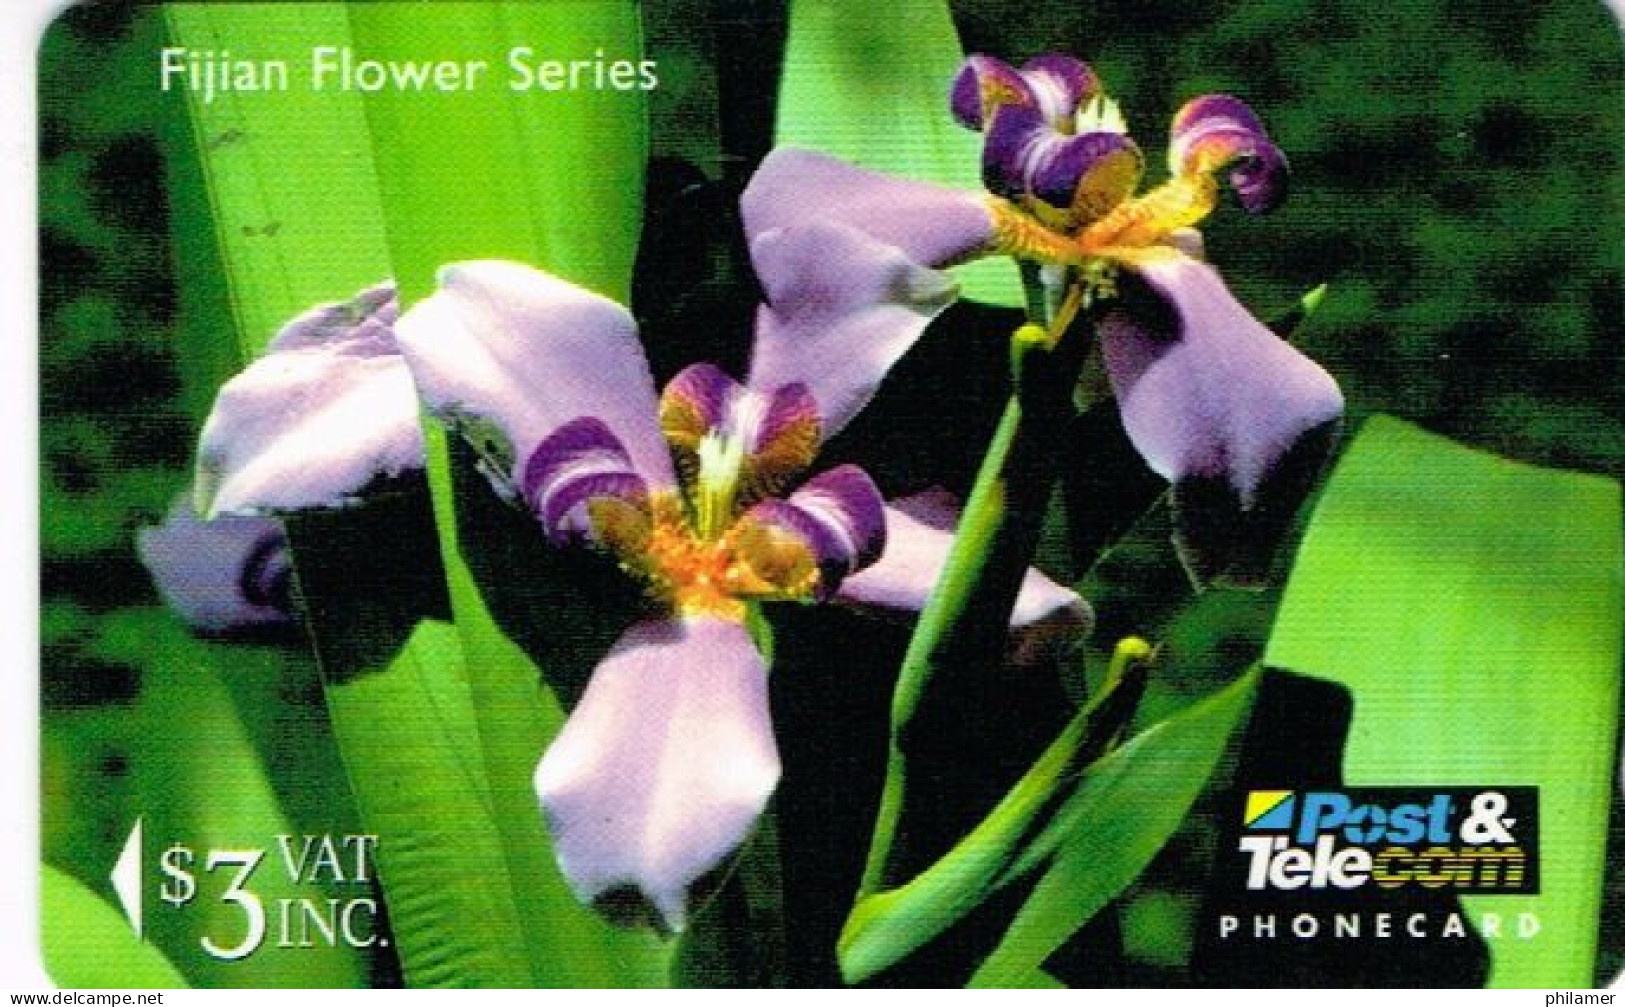 Fidji Fiji TELECARTE PHONECARD Telecom Flower Day Iris Fleur 3 Dollars 1995 Ut BE - Fiji